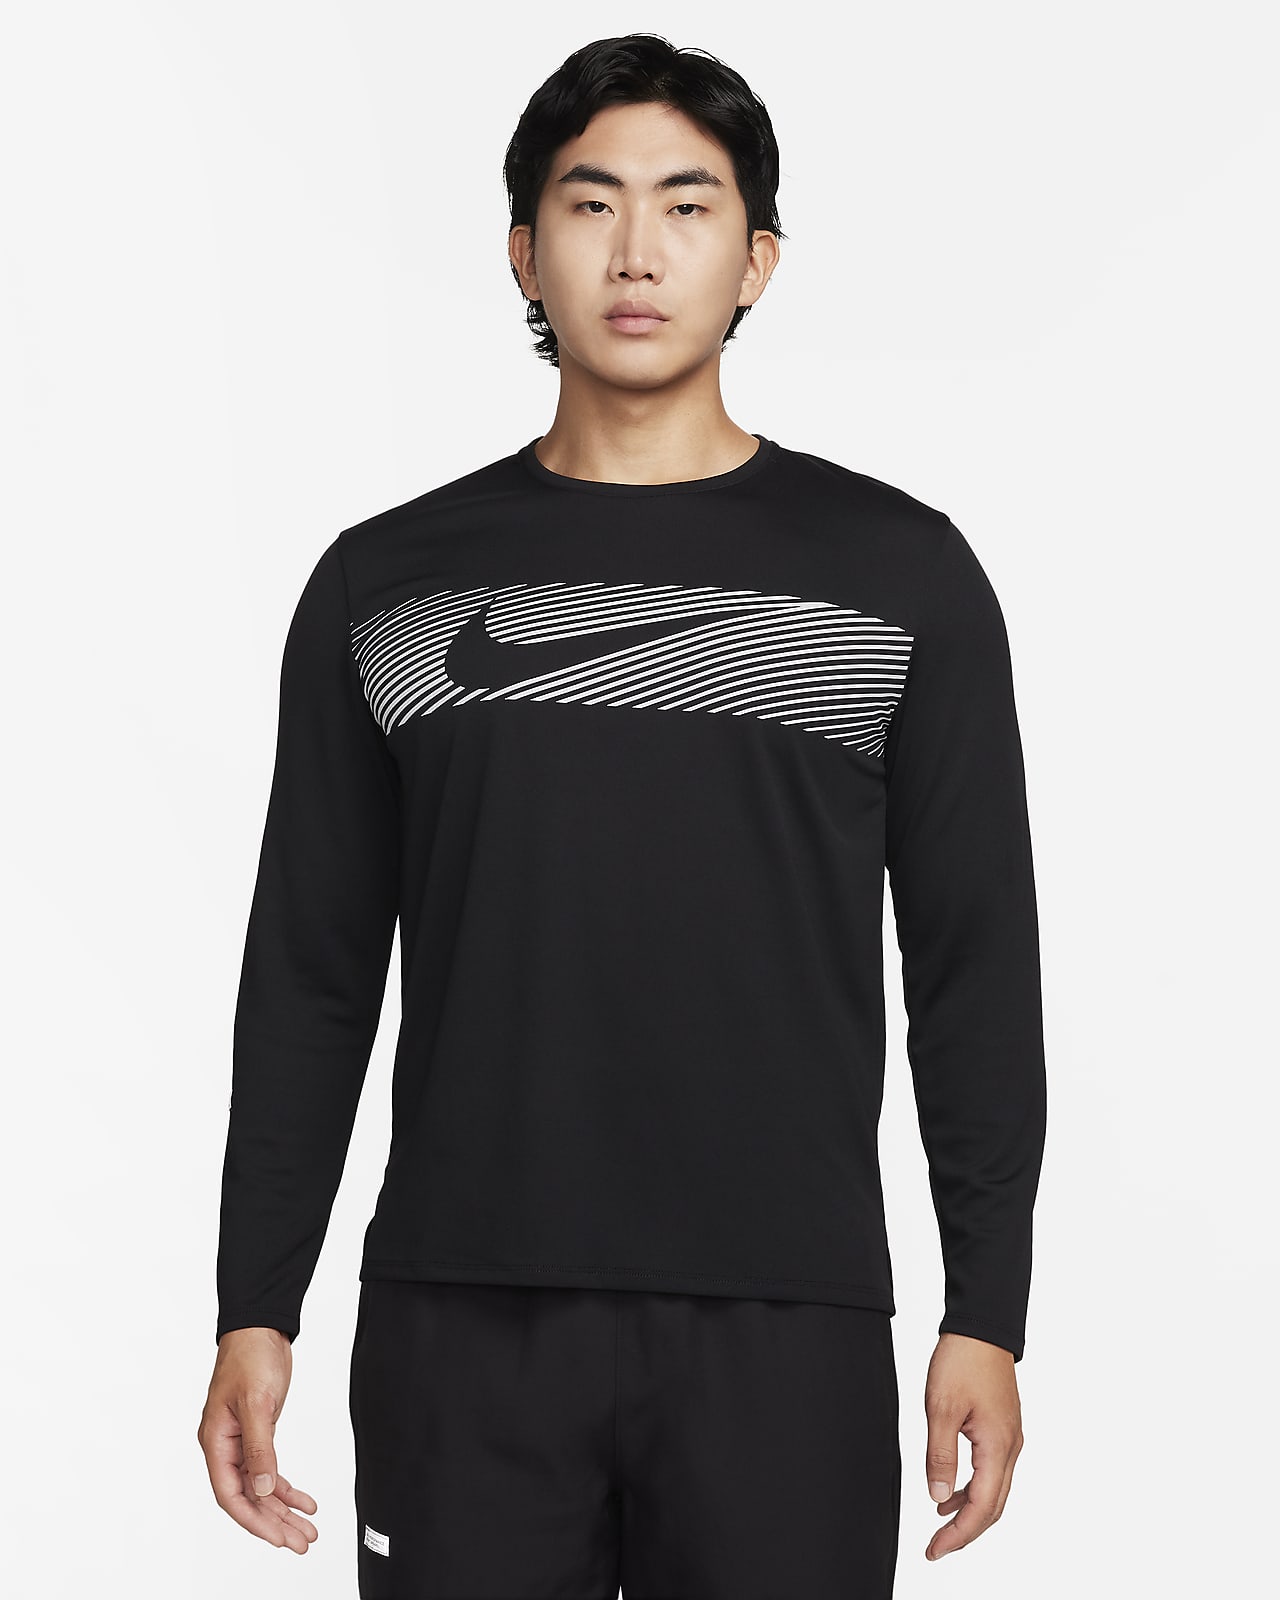 Nike Men's Waffle Flash Breathe Long Sleeve Running Top Shirt DRI-FIT